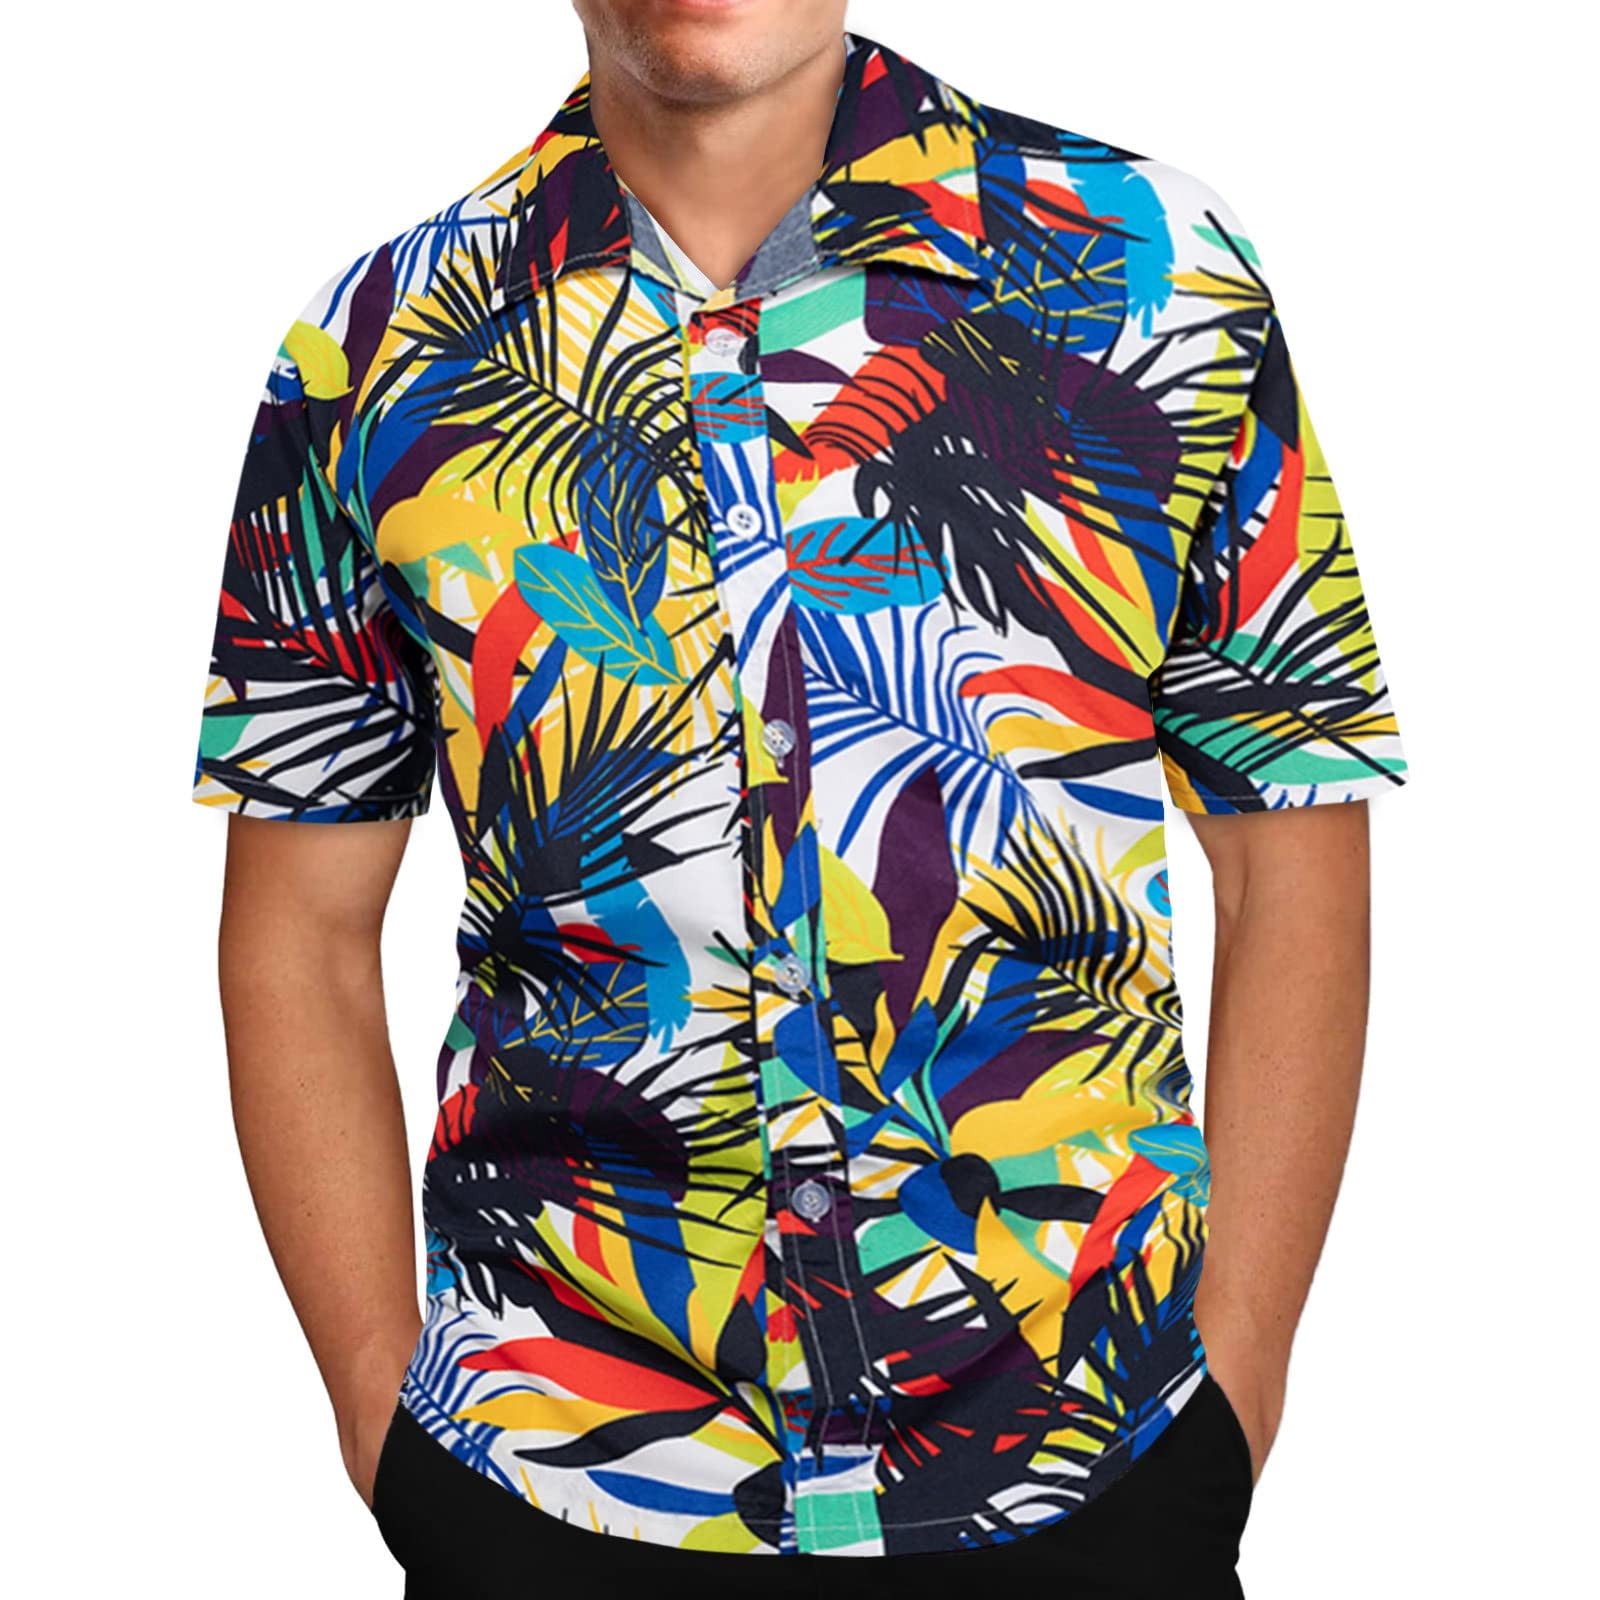 Cllios Mens's Hawaiian Shirts Summer Tropical Print Shirt Casual Short Sleeve Shirts Button Down Big and Tall Aloha Shirt Top for Beach Vacation